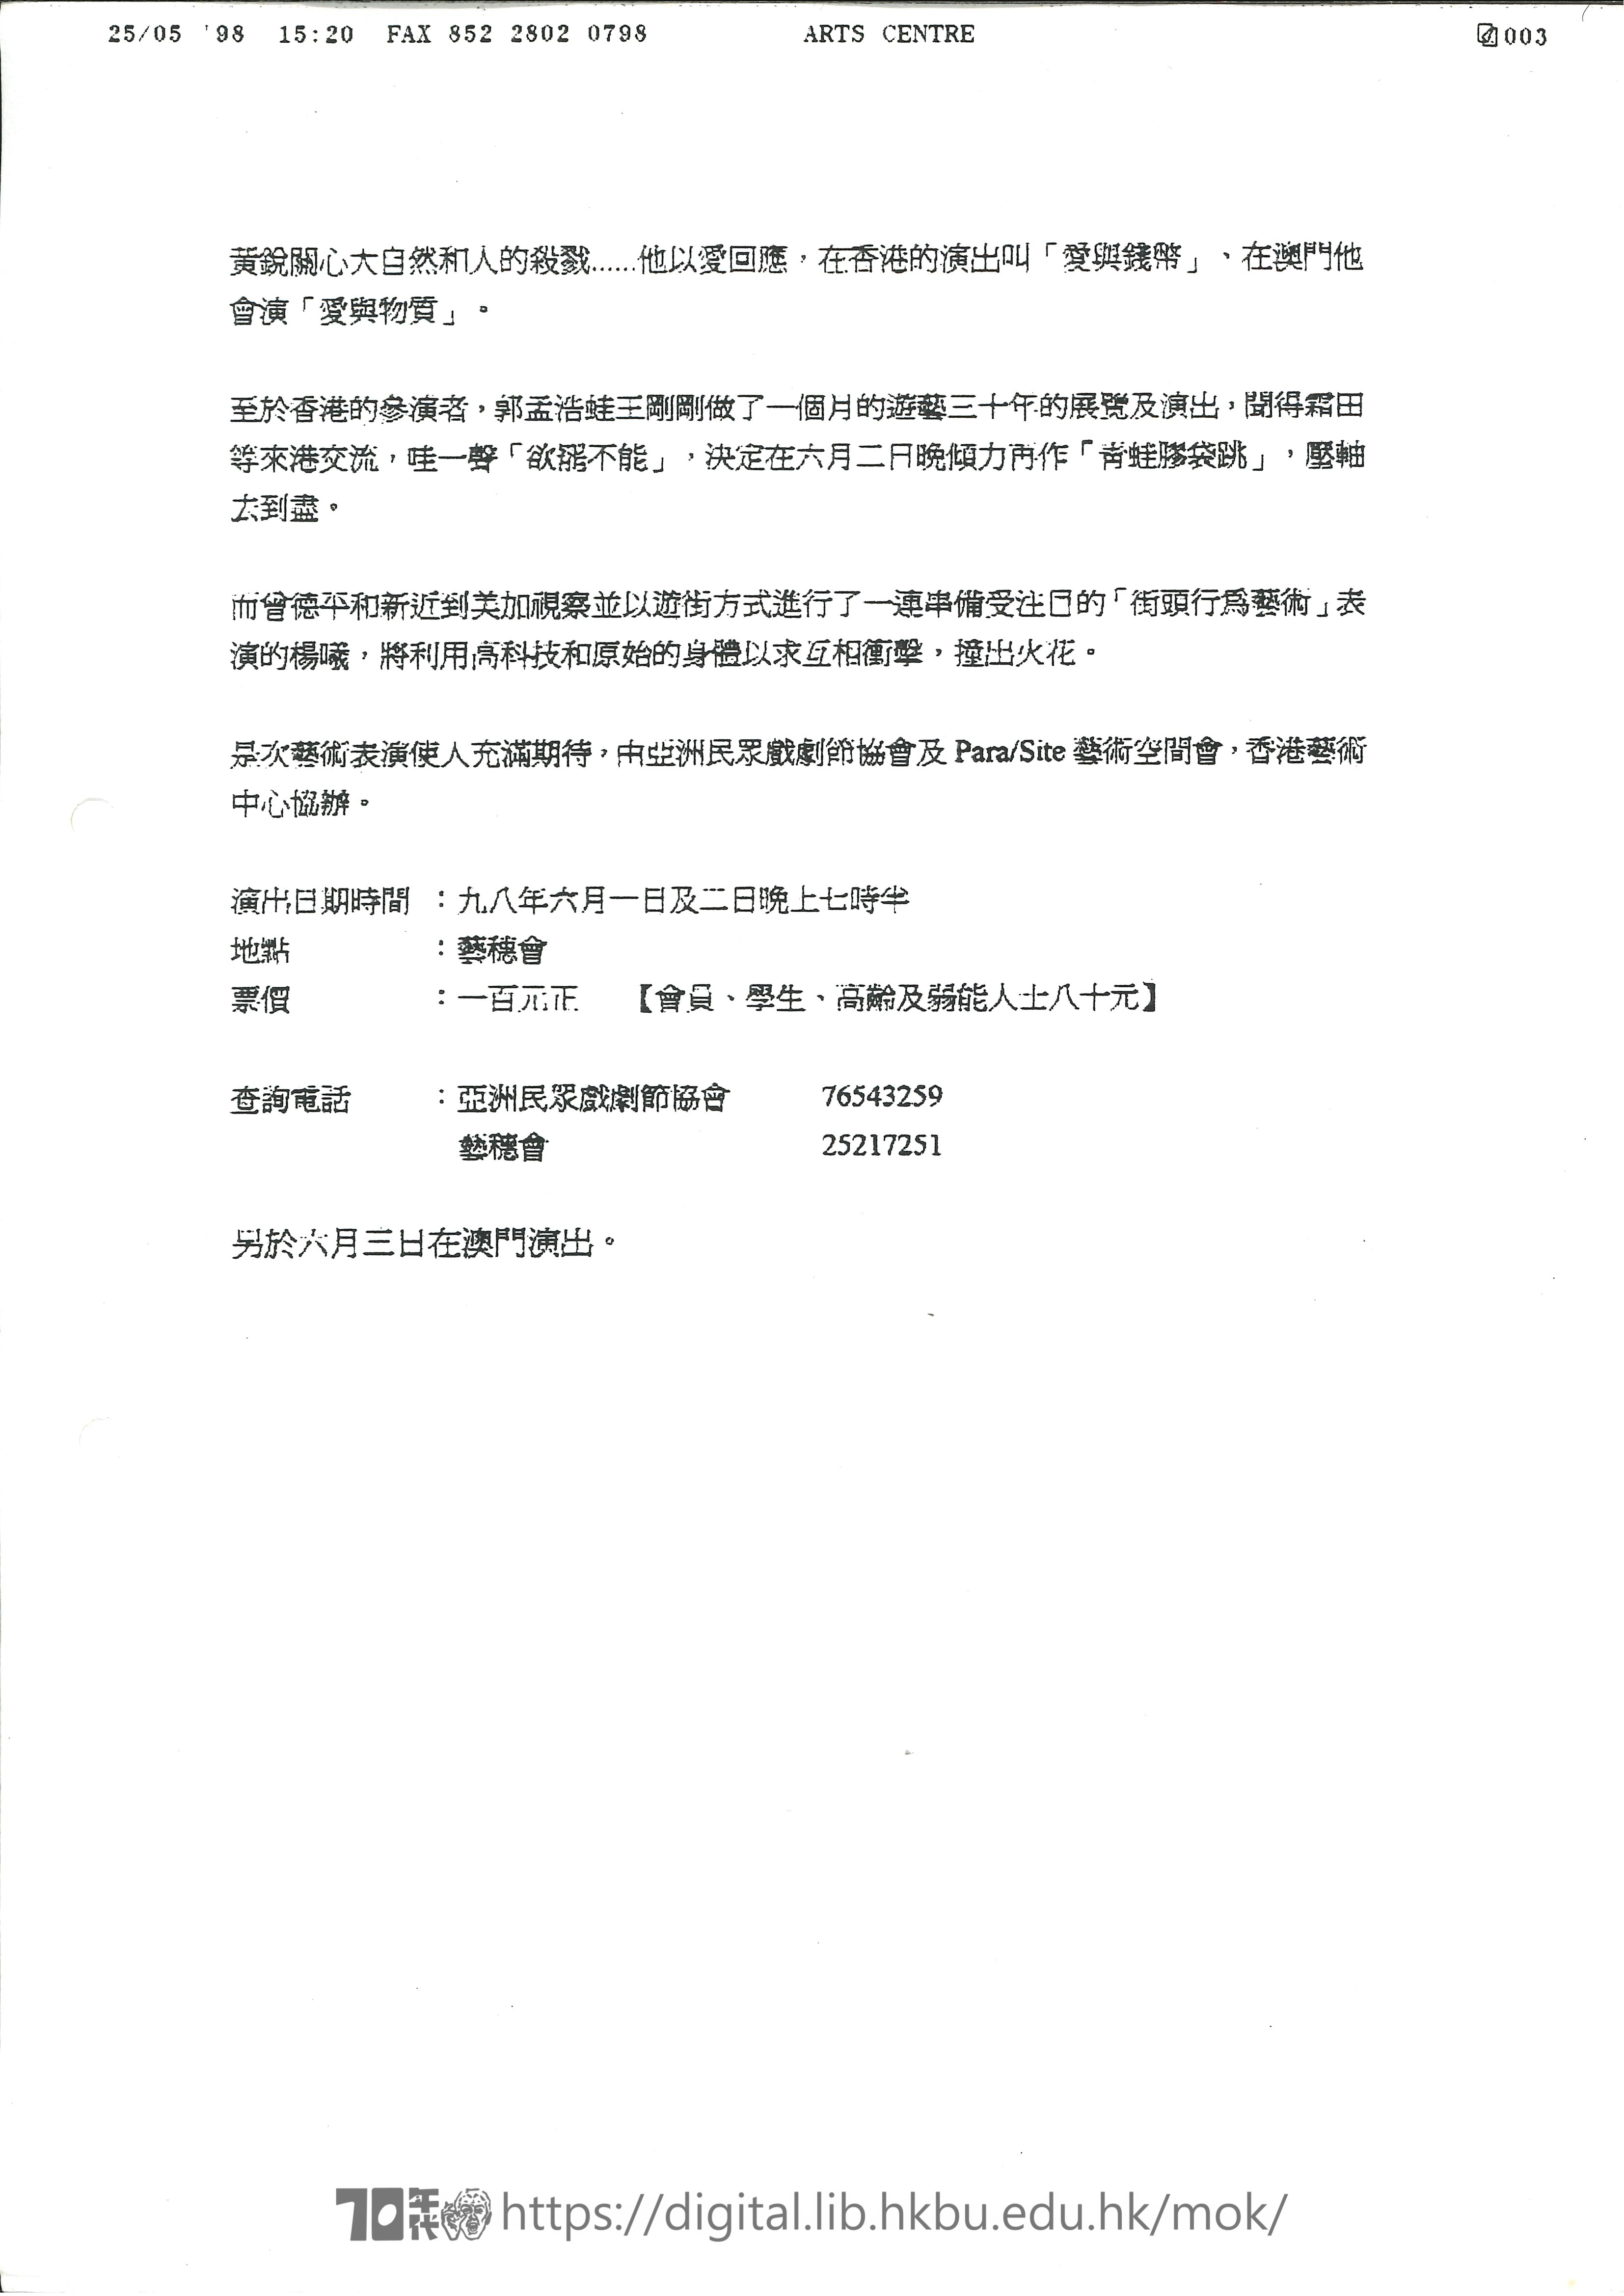 Performance Art  Press release of Japan/China performance art exchange  